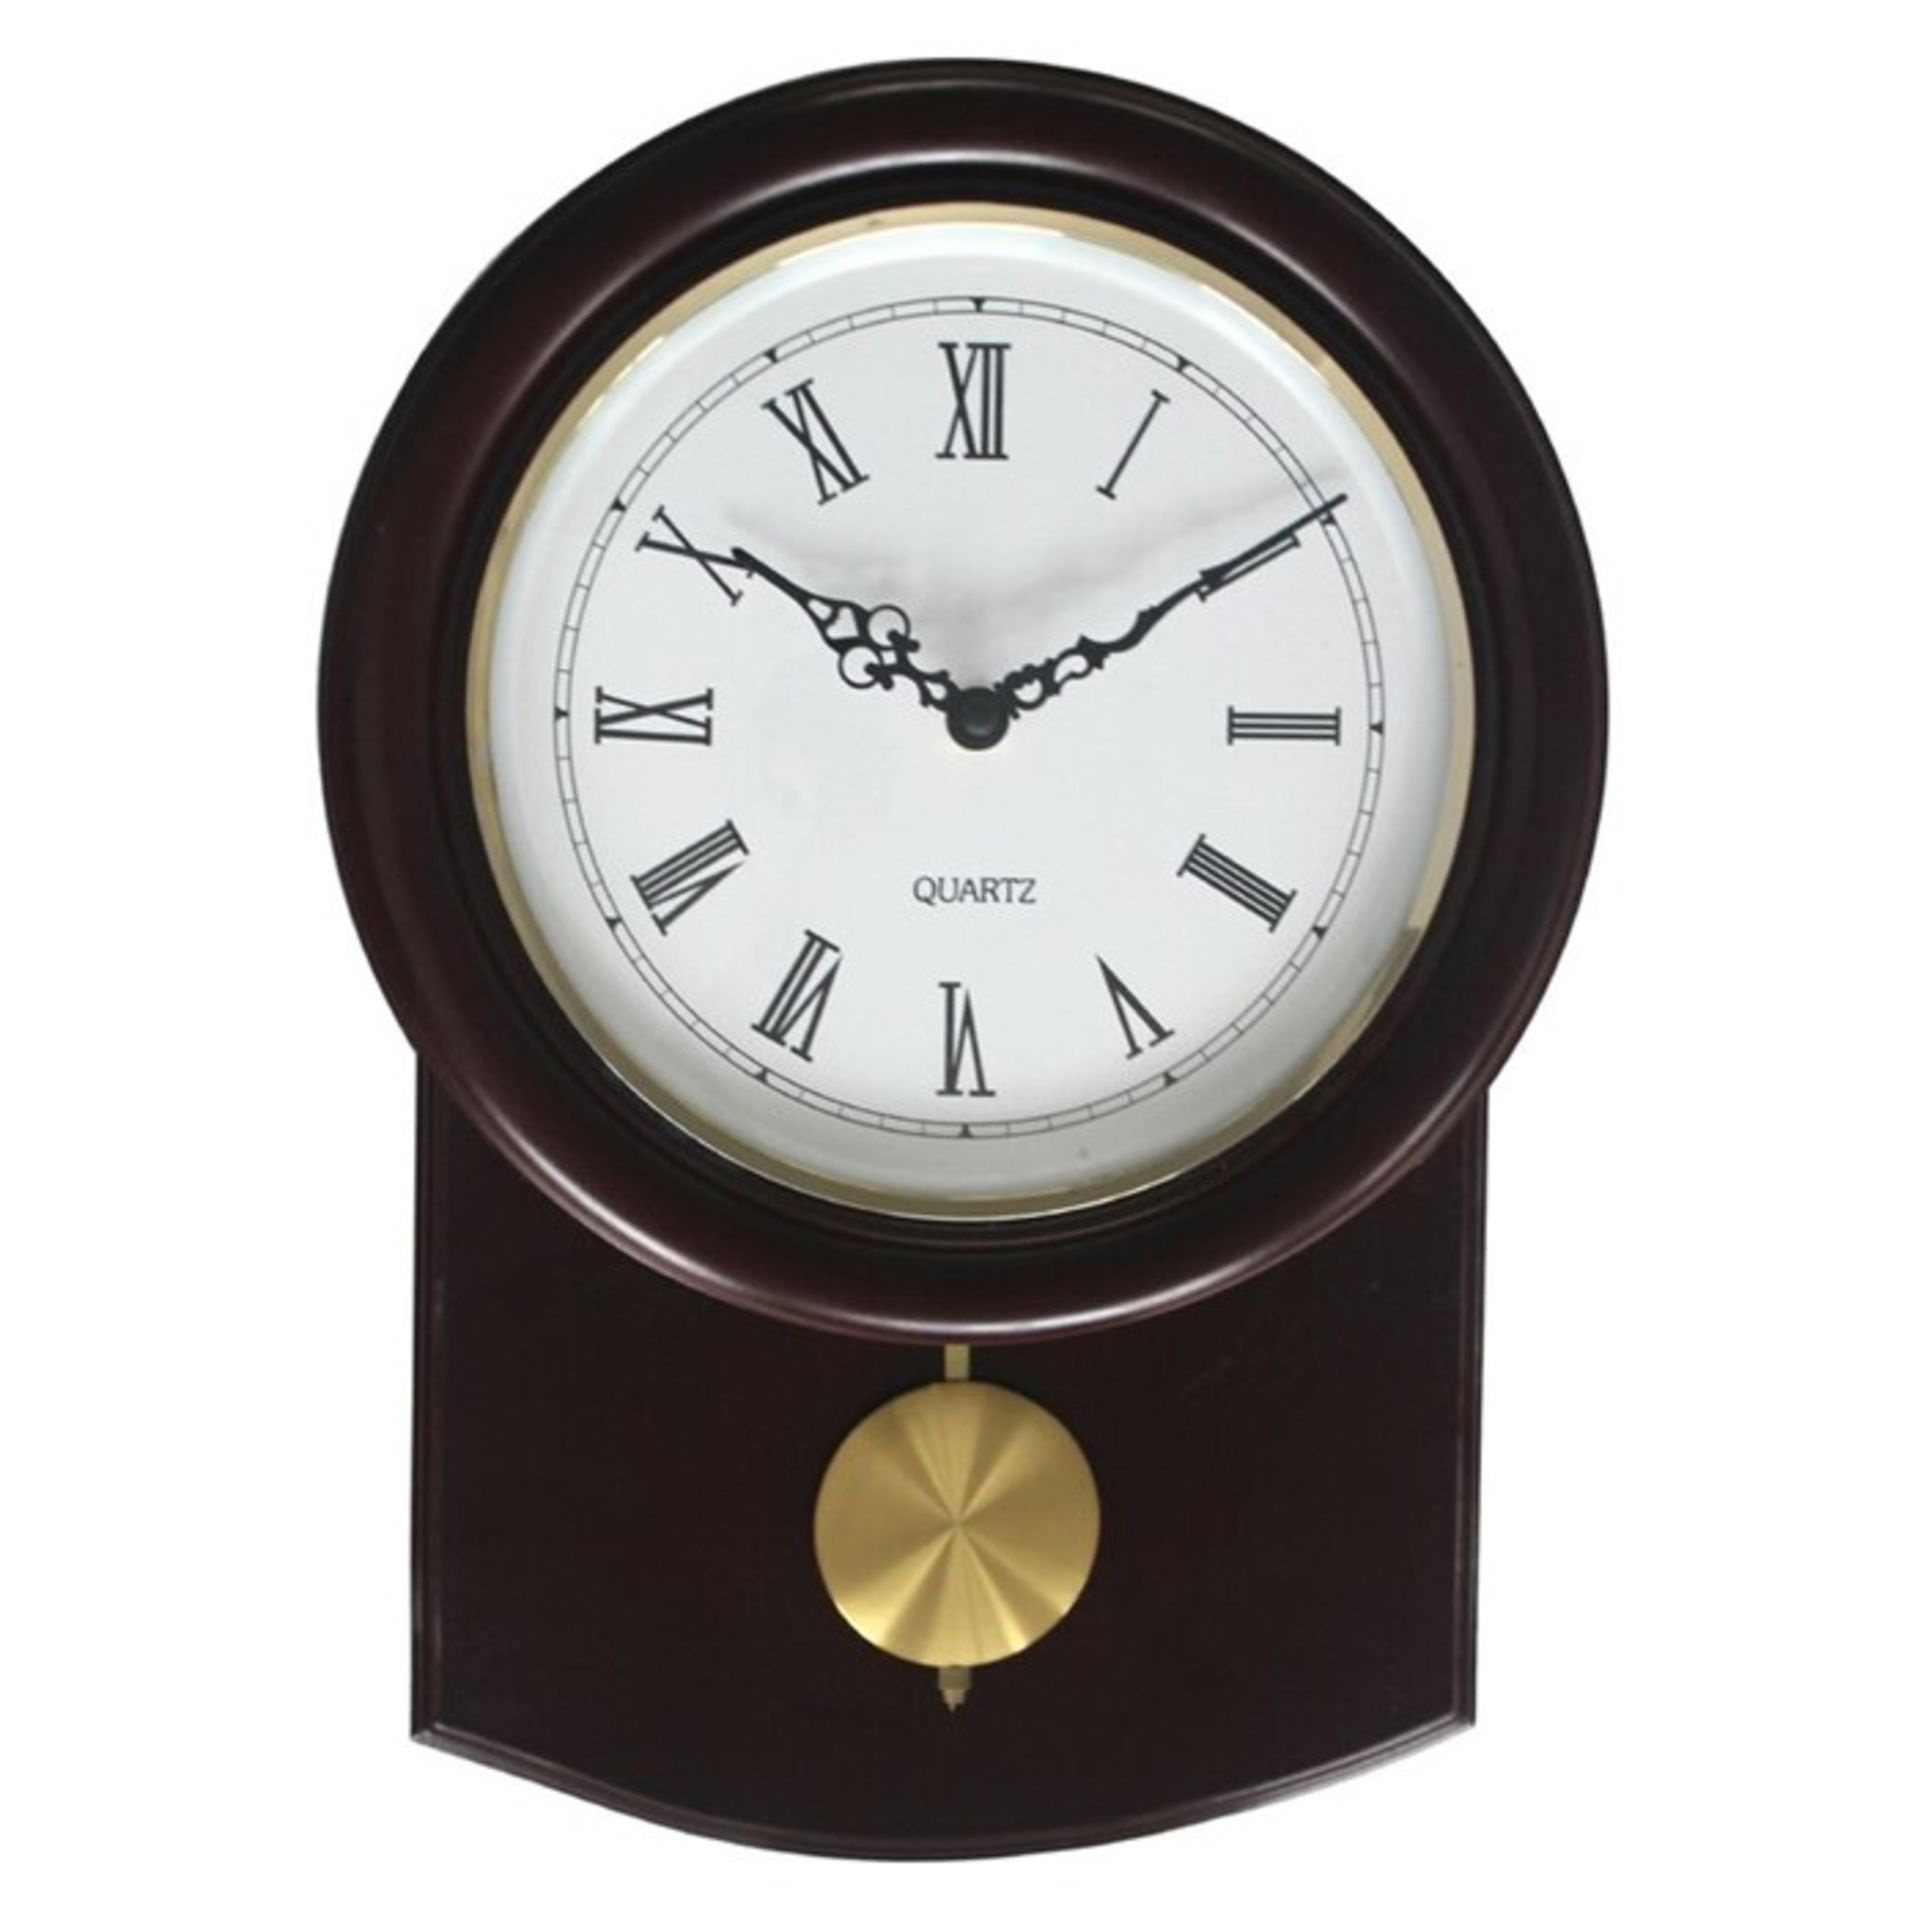 Ophelia & Co. Pendulum Wall Clock - RRP£38.82 (DHO